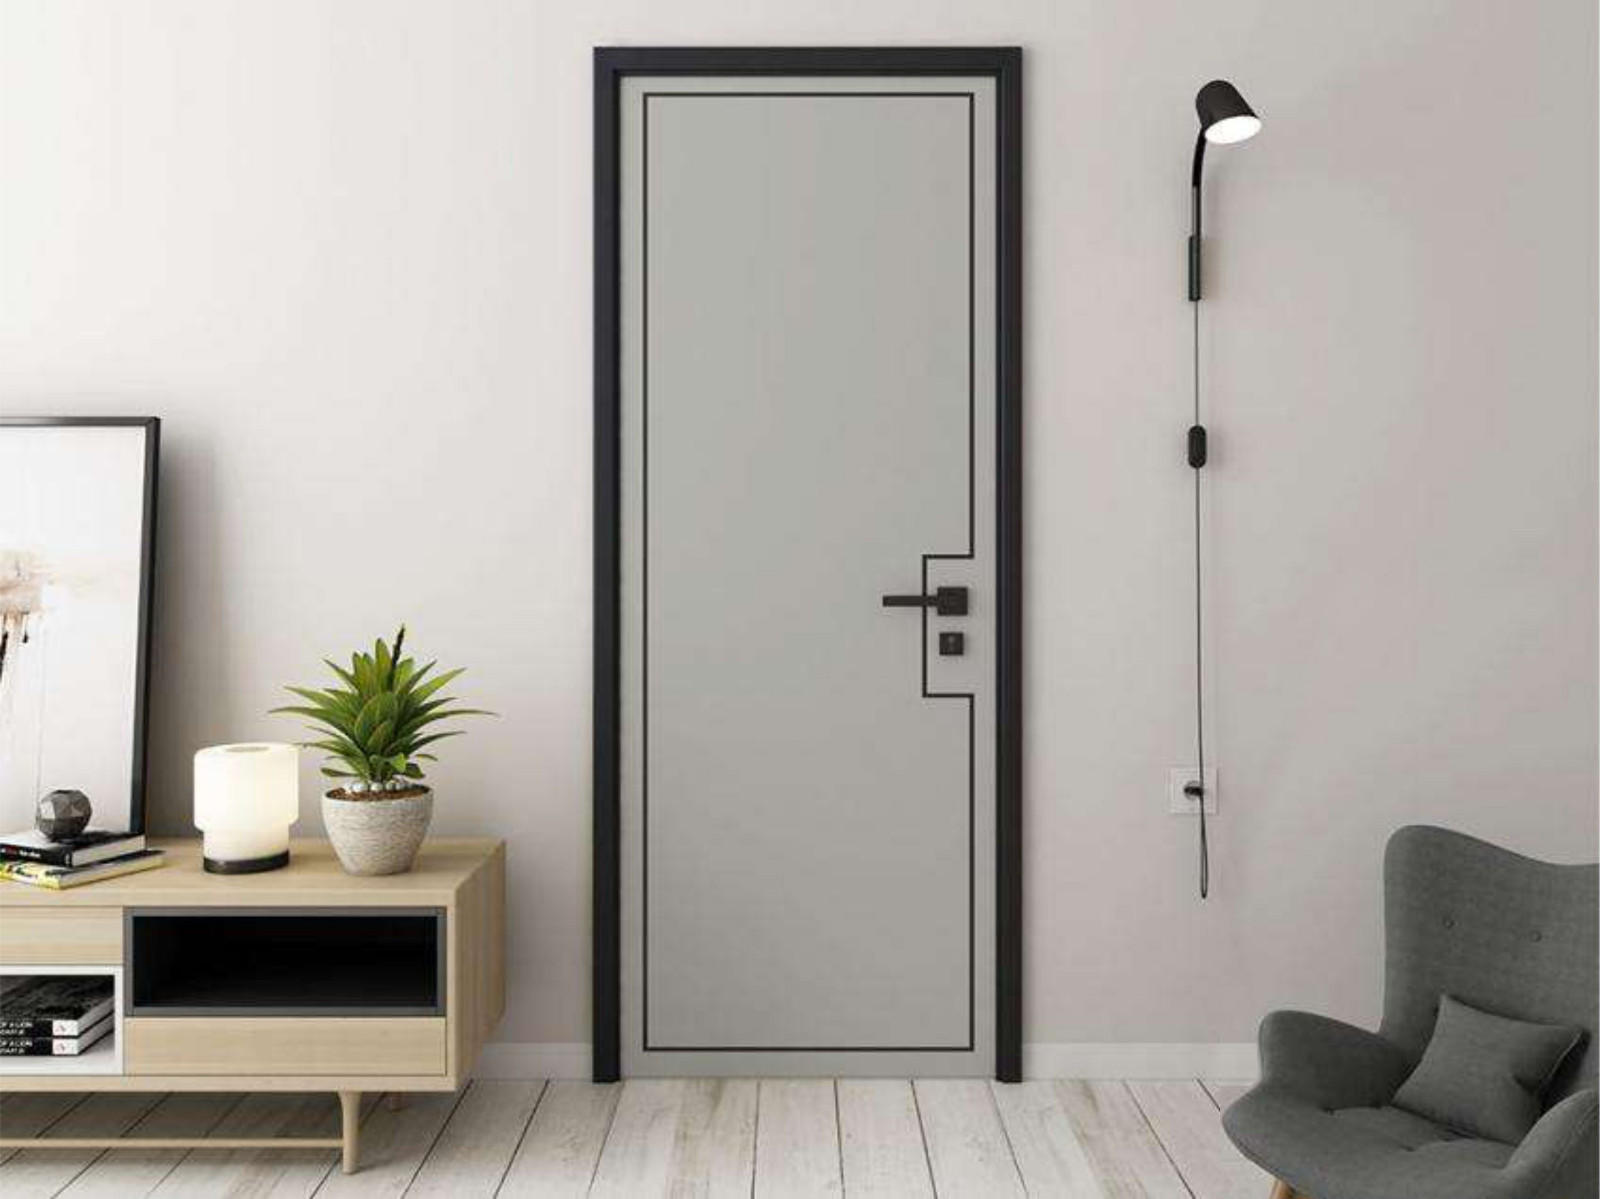 Casen fashion cheap doors wholesale for washroom